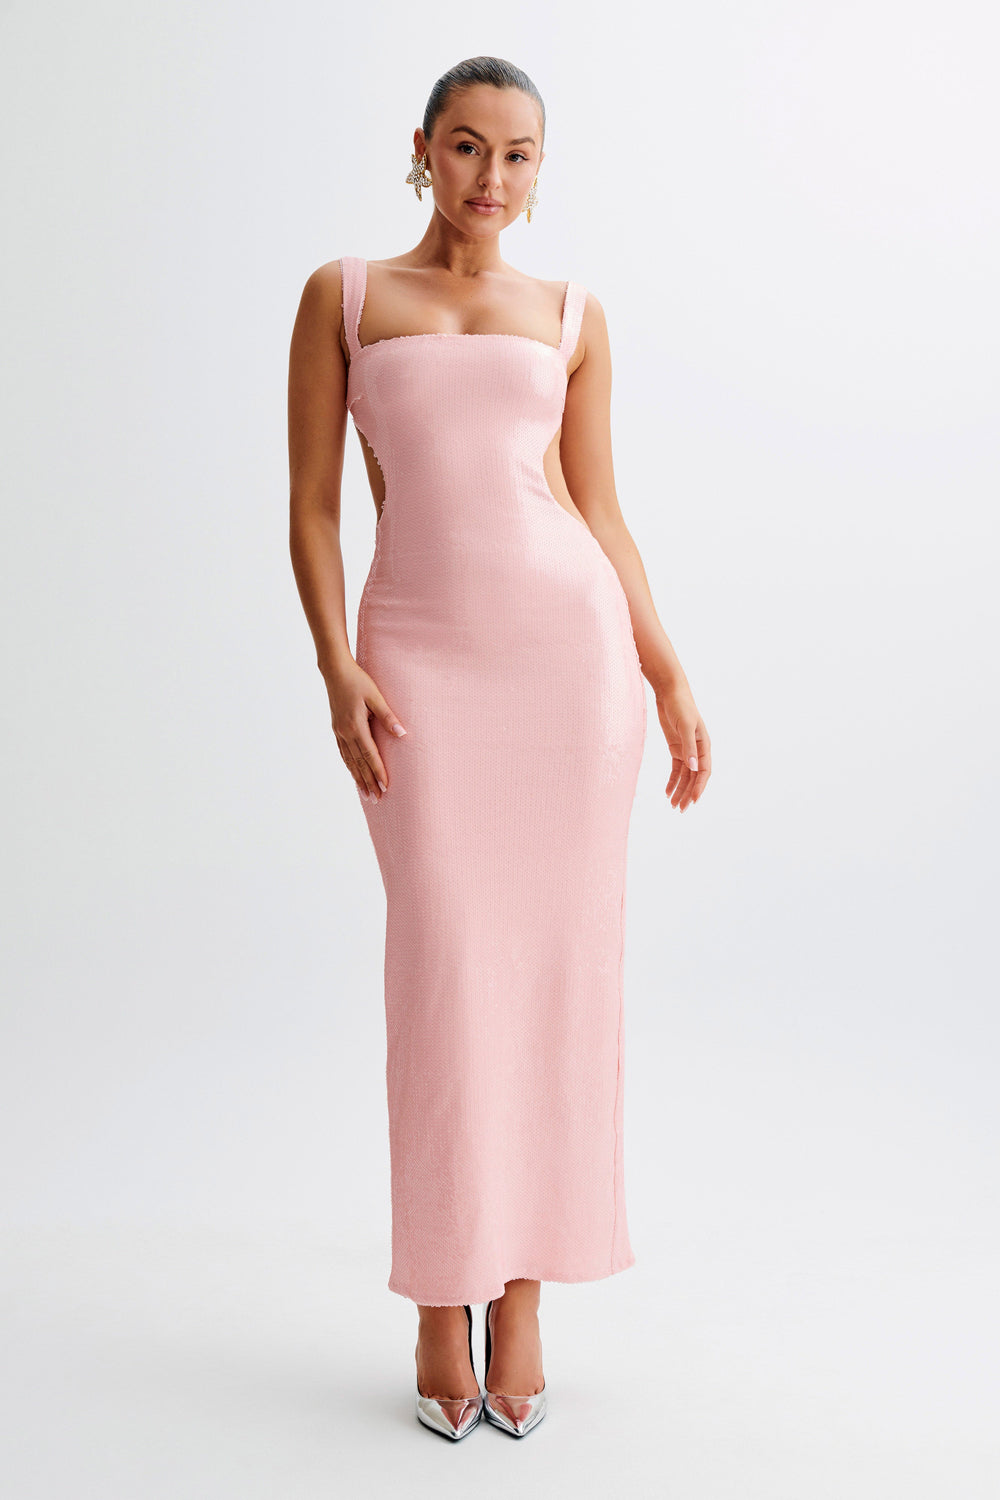 Adoria Sequin Cut Out Maxi Dress - Pale Pink